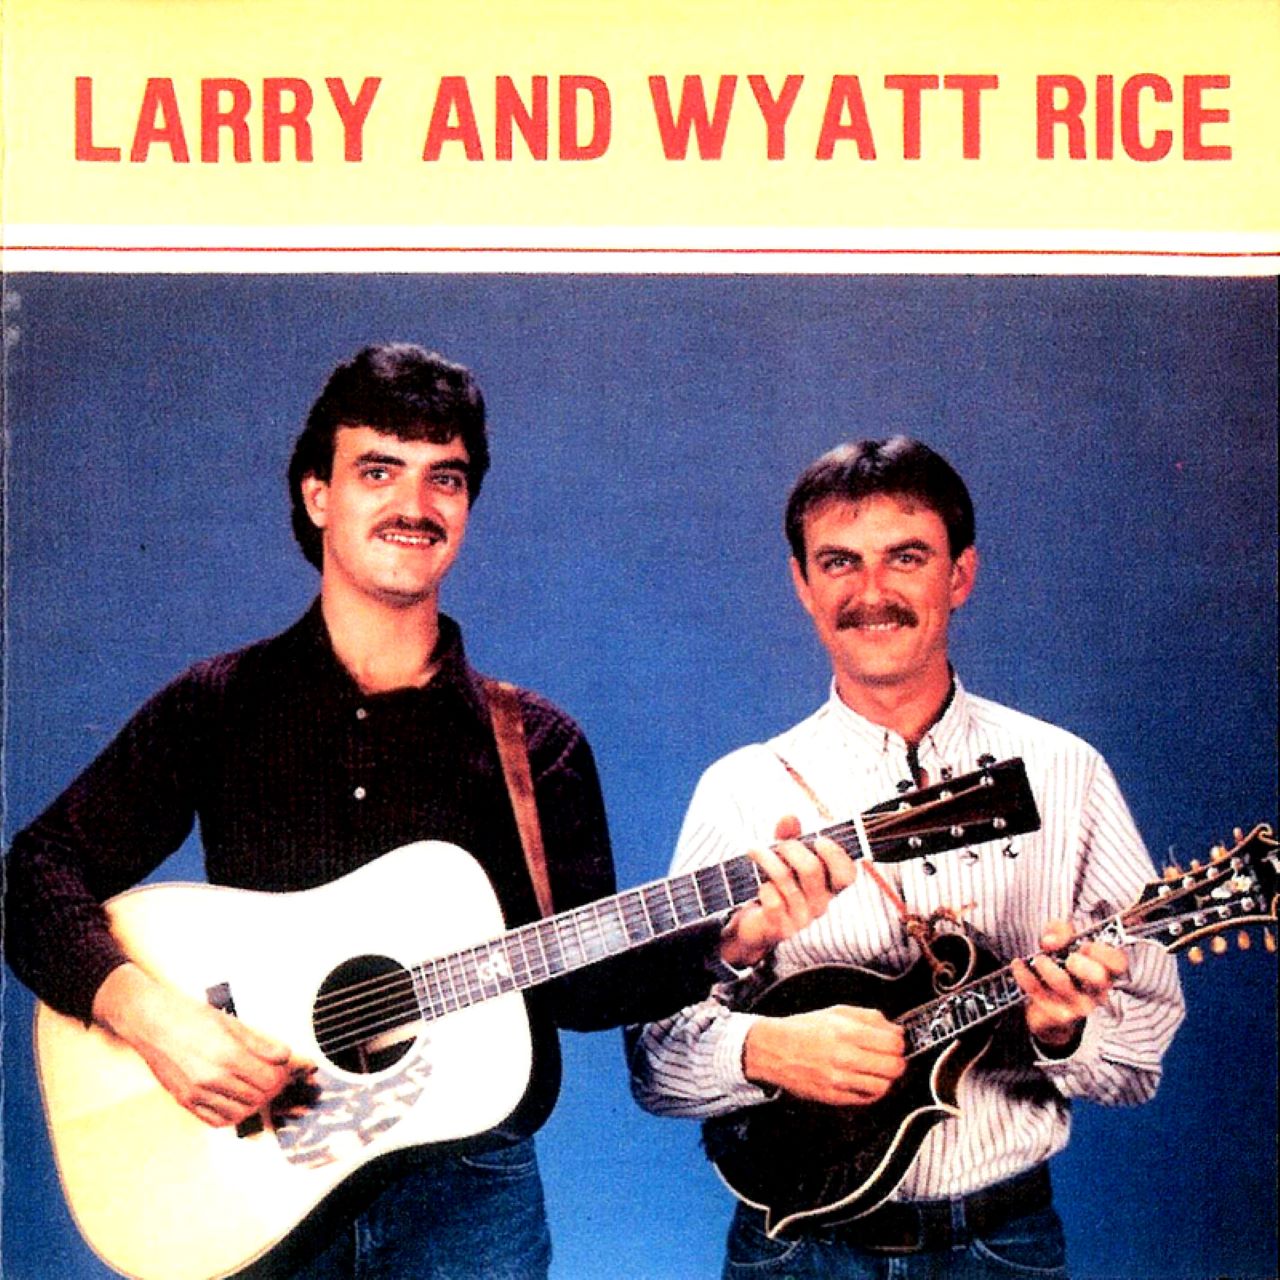 Larry & Wyatt Rice - Larry & Wyatt Rice cover album